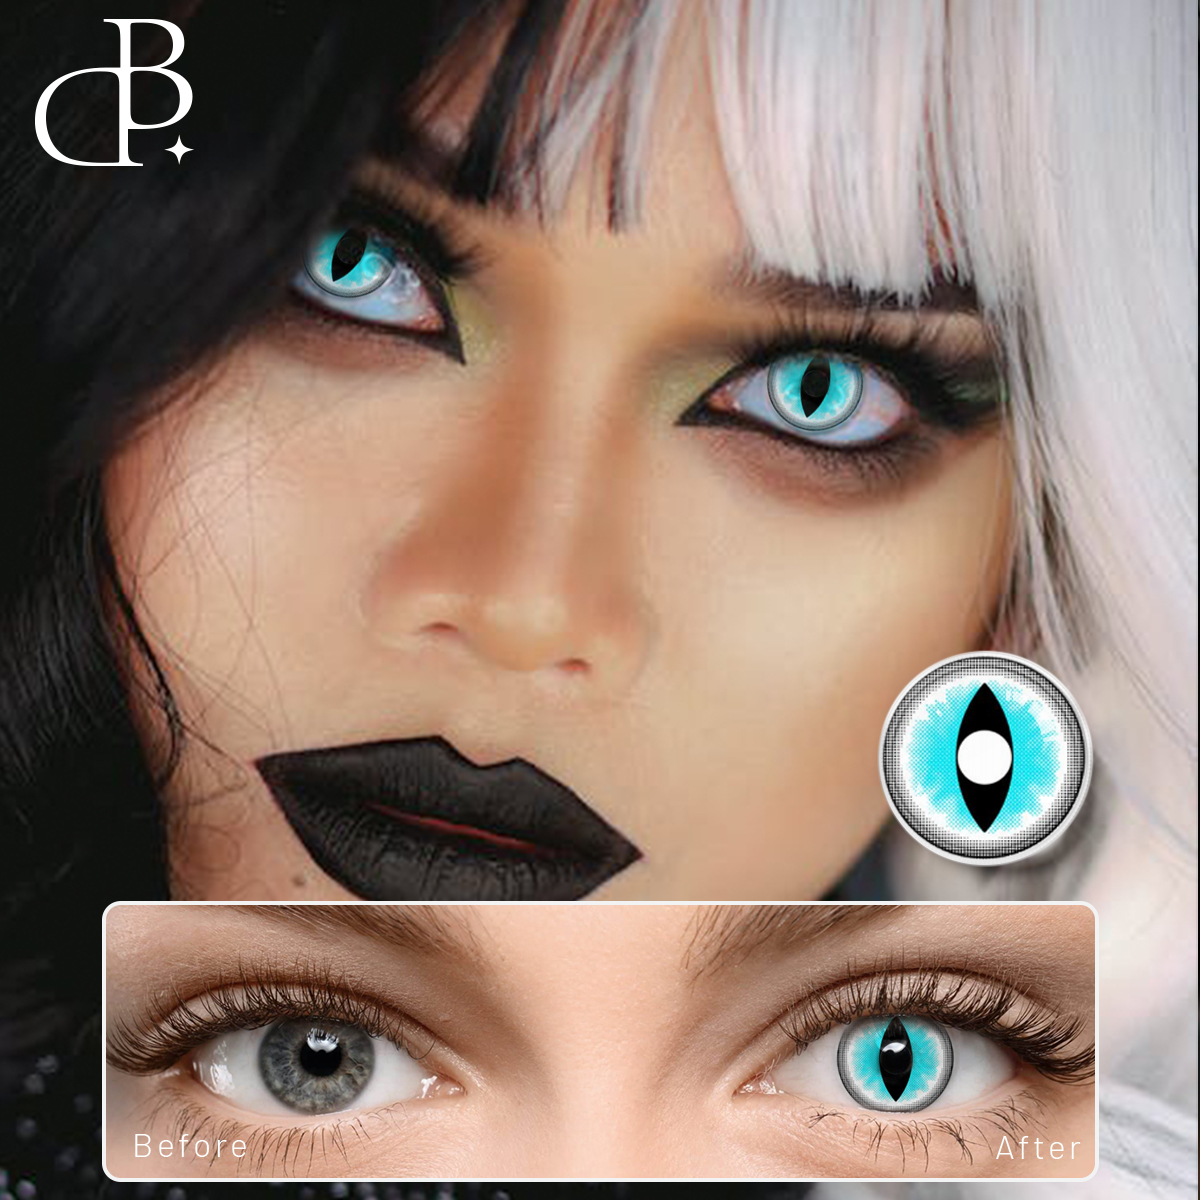 Dbeyes oem/odm contact lenses Blue Cat Eye ទំនាក់ទំនង Halloween ប្រចាំឆ្នាំ កែវភ្នែក Cosplay Contact Lenses Soft Crazy Party Contact Lens